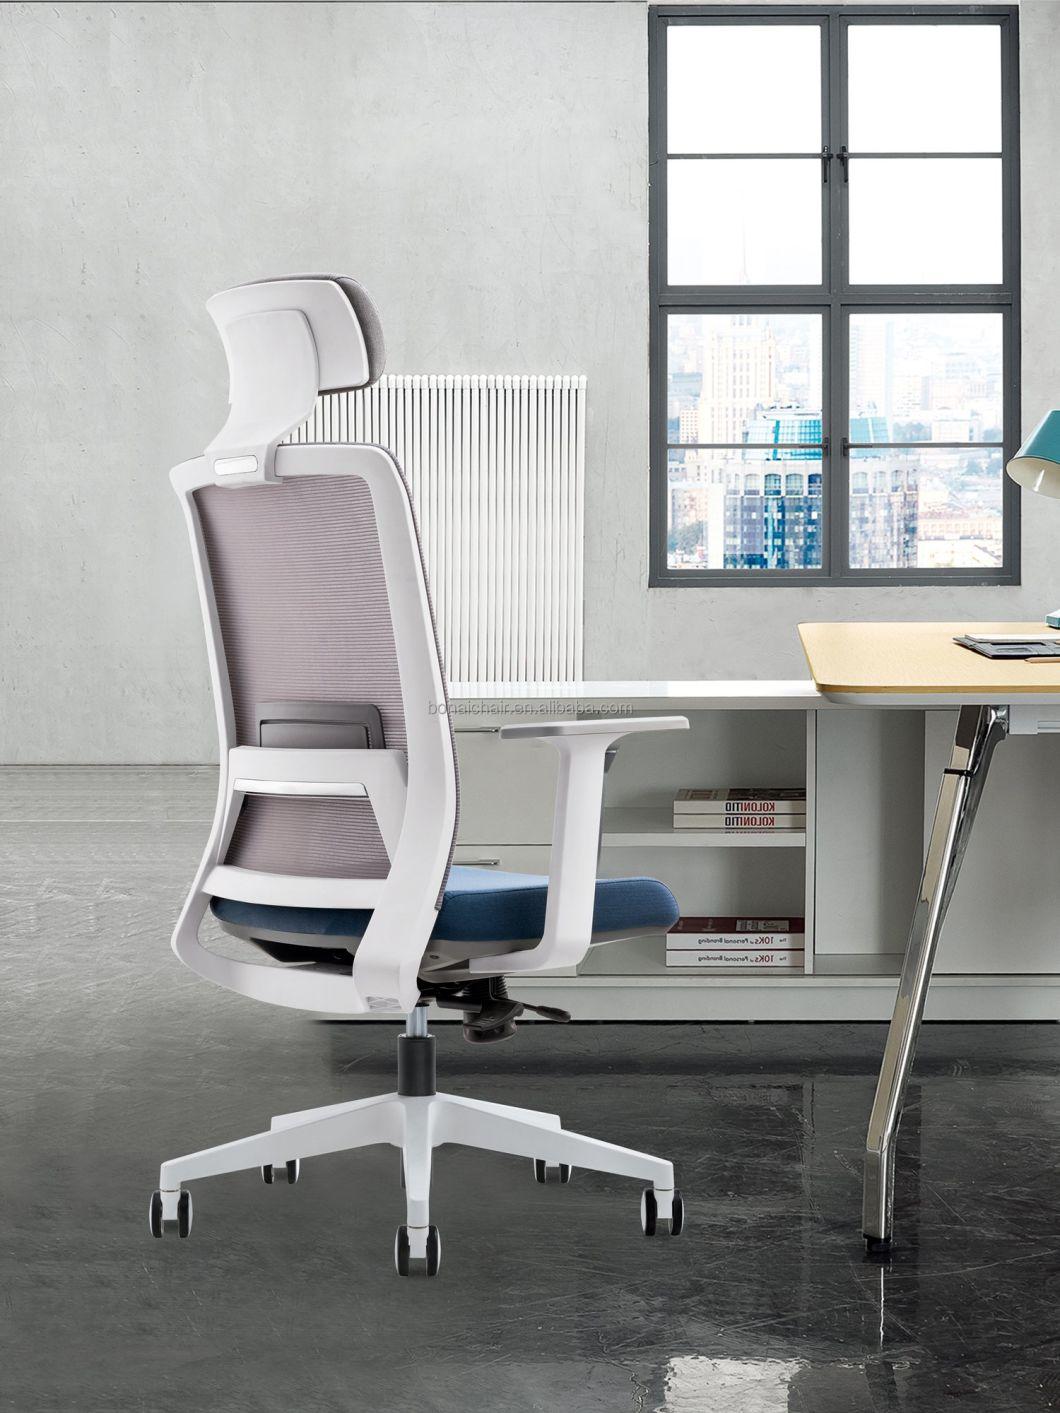 Best Price Europe Design Ergonomic Back Design Office Chair Executive Computer Swivel High Back Mesh